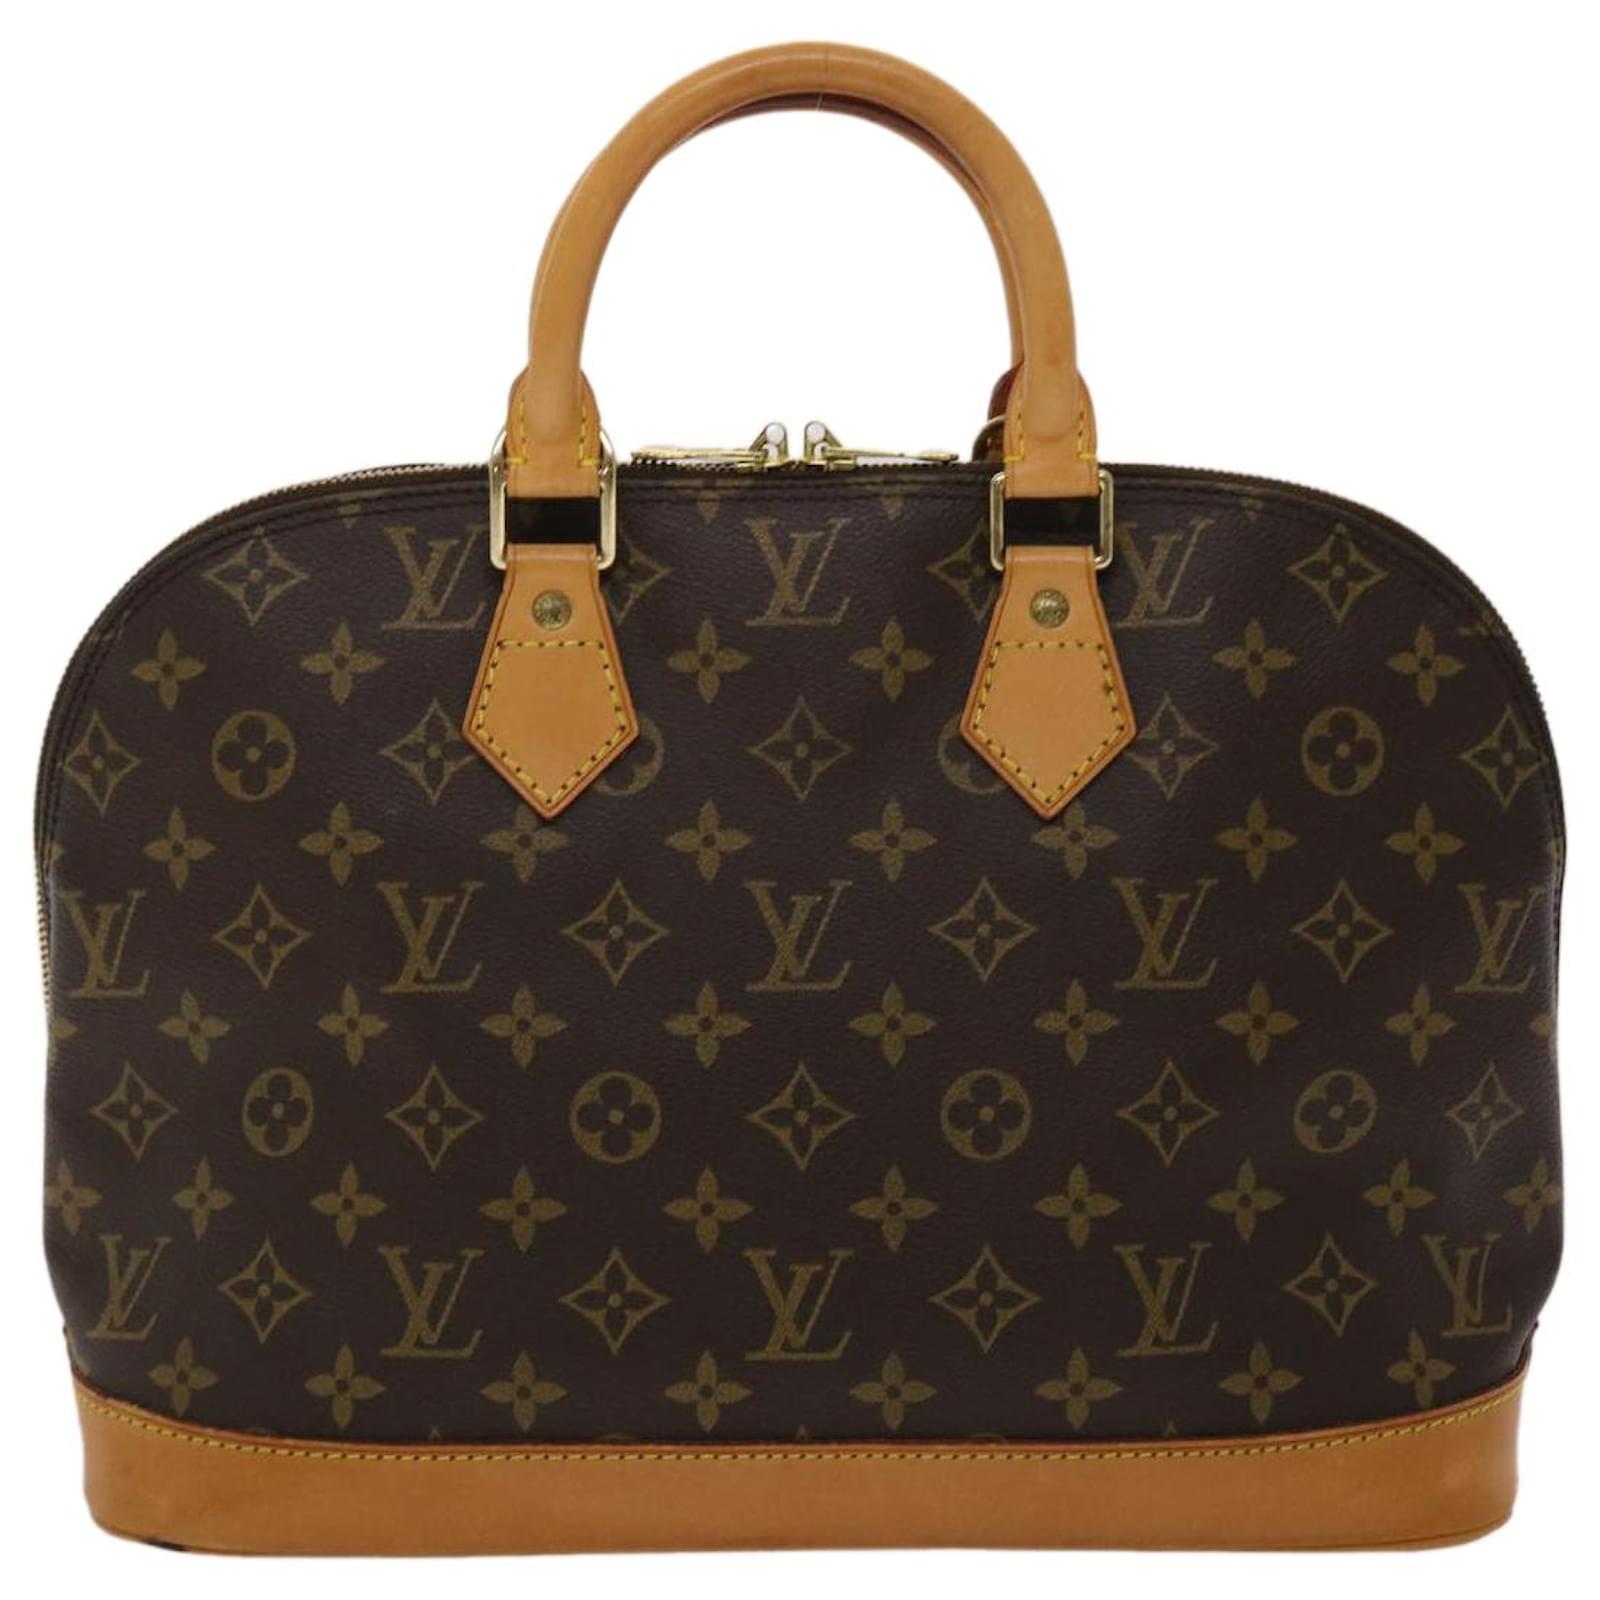 Louis Vuitton Alma Small Model Handbag in Vanilla Yellow EPI Leather